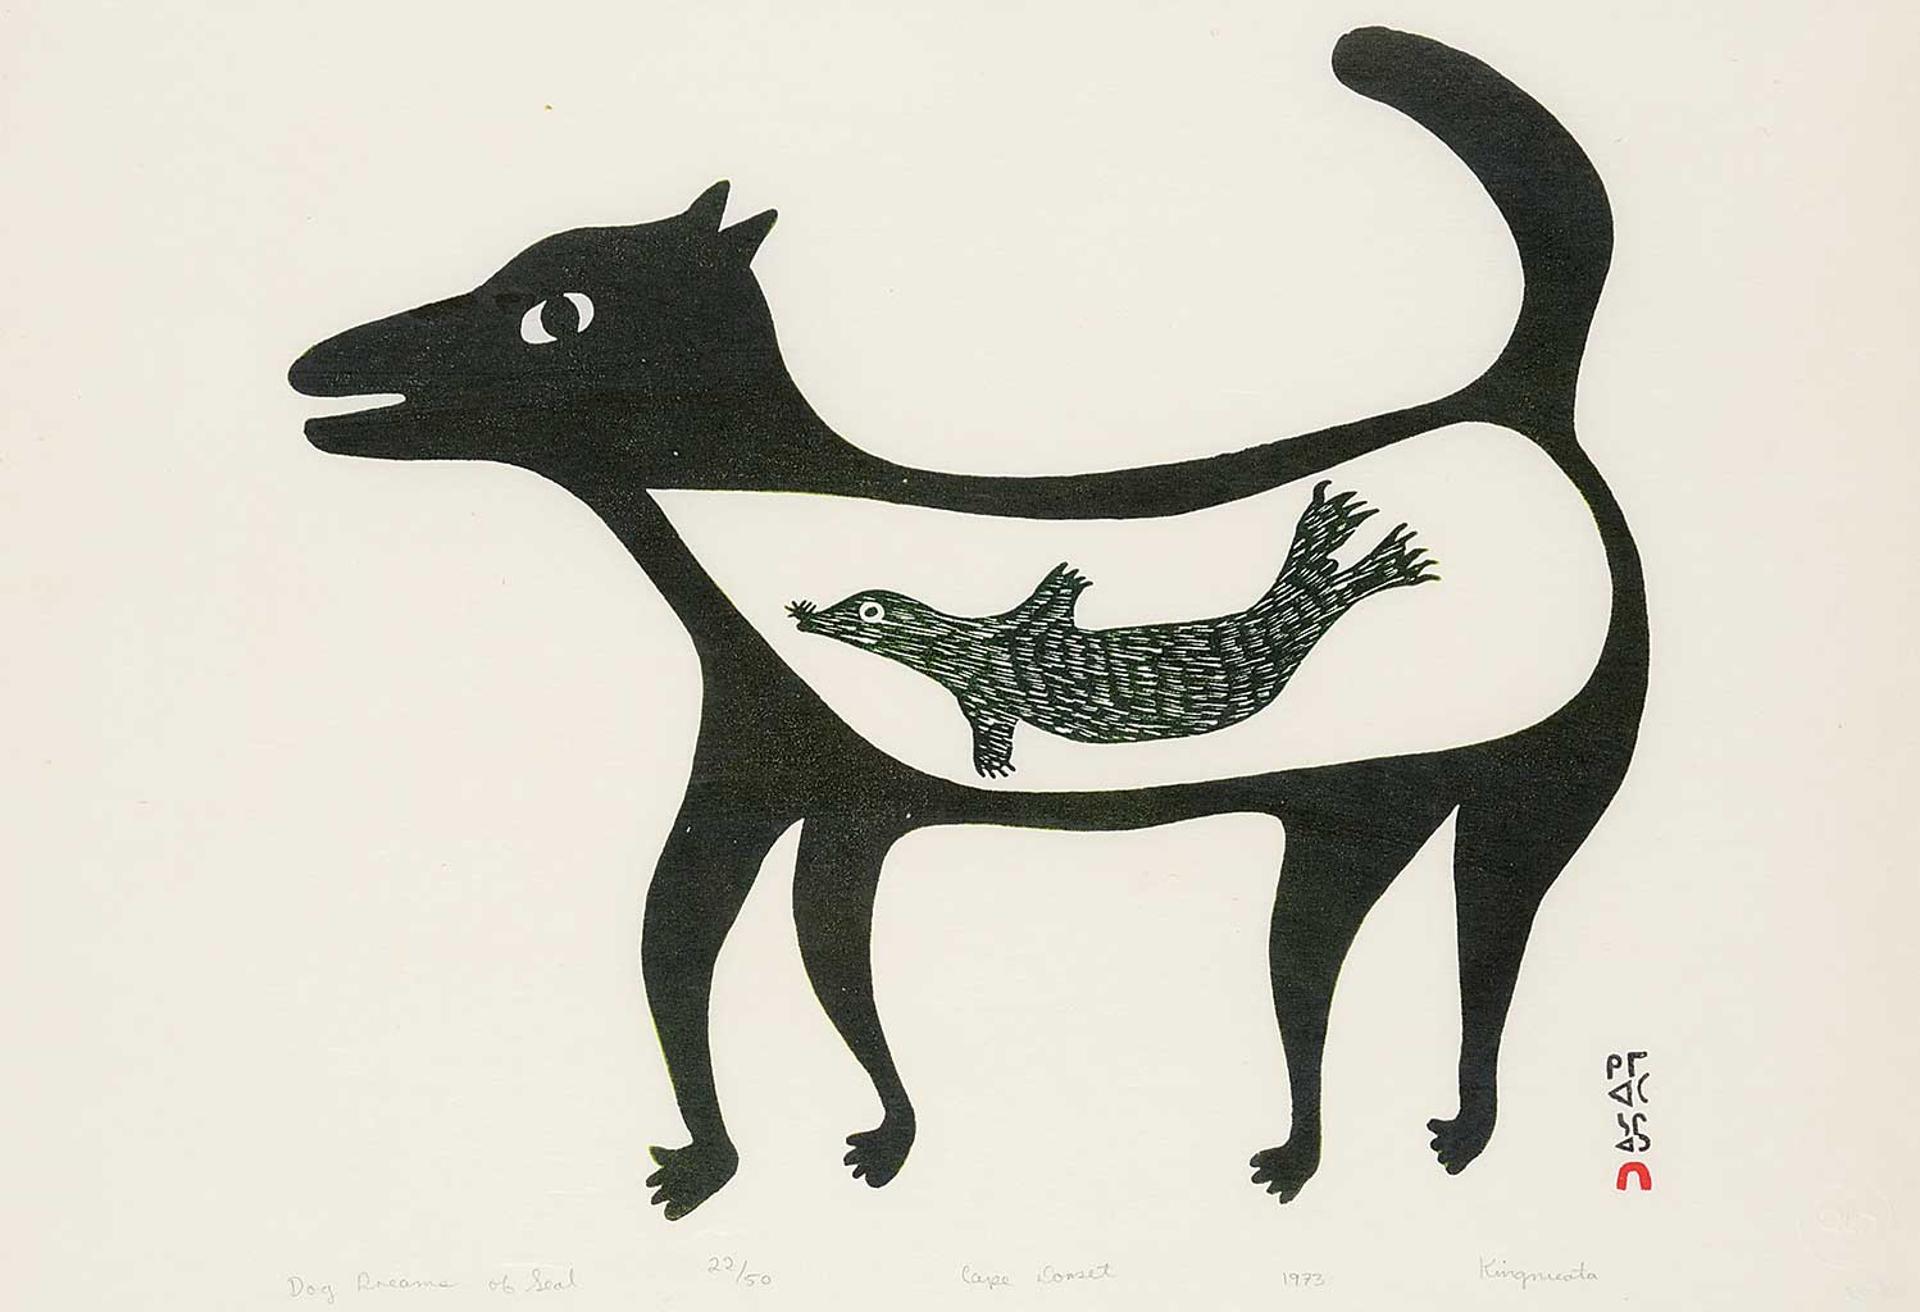 Kingmeata Etidlooie (1915-1989) - Dog Dreams of Seal  #22/50